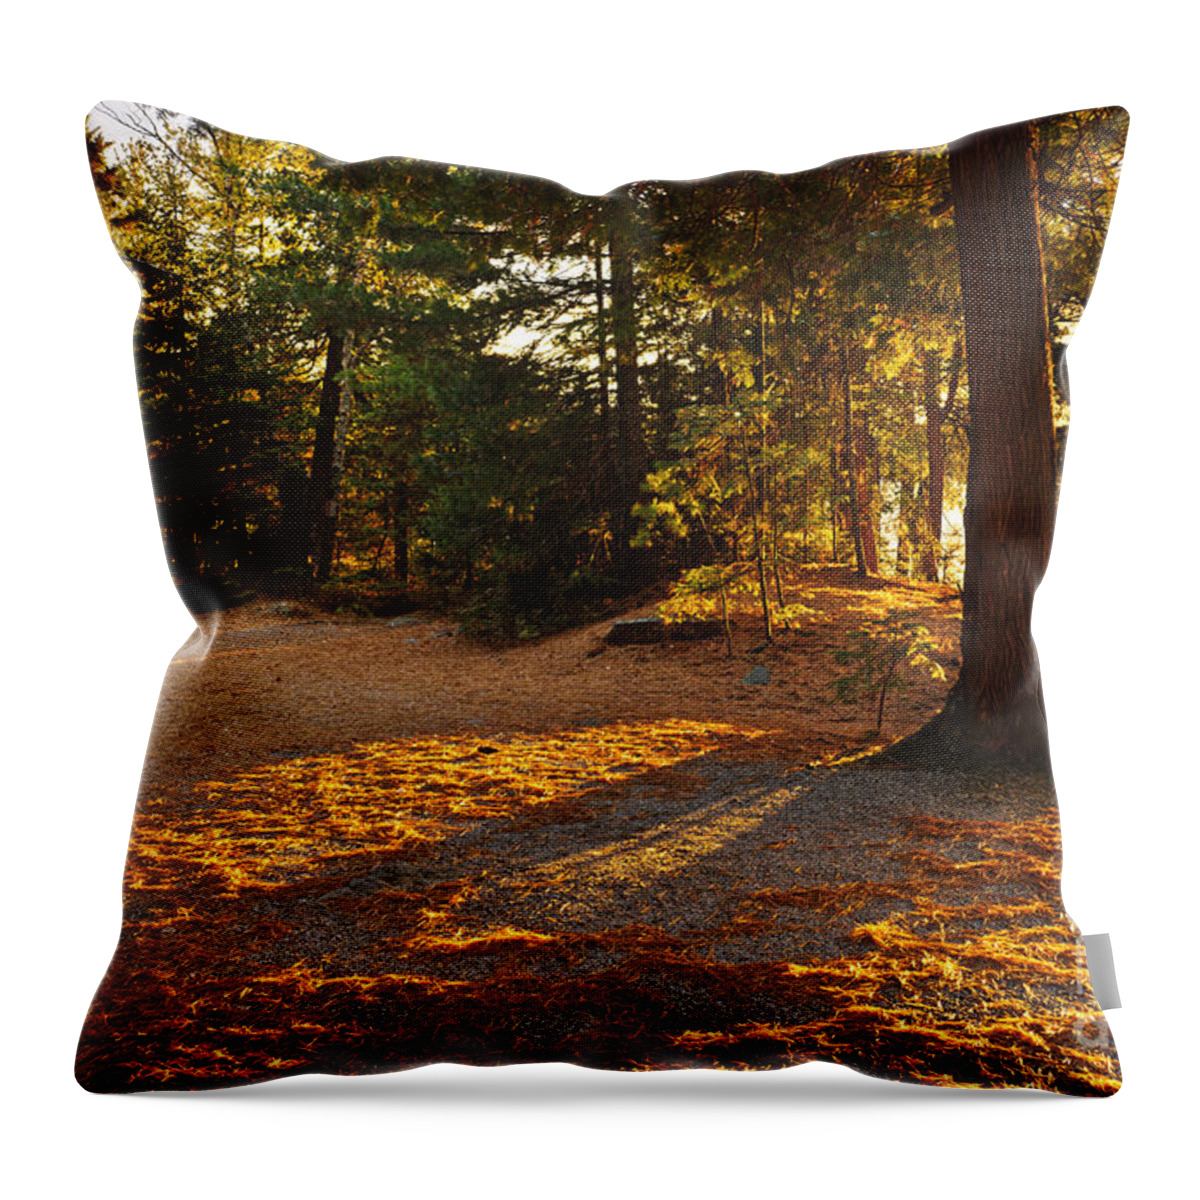 Trees Throw Pillow featuring the photograph Autumn trees near lake by Elena Elisseeva